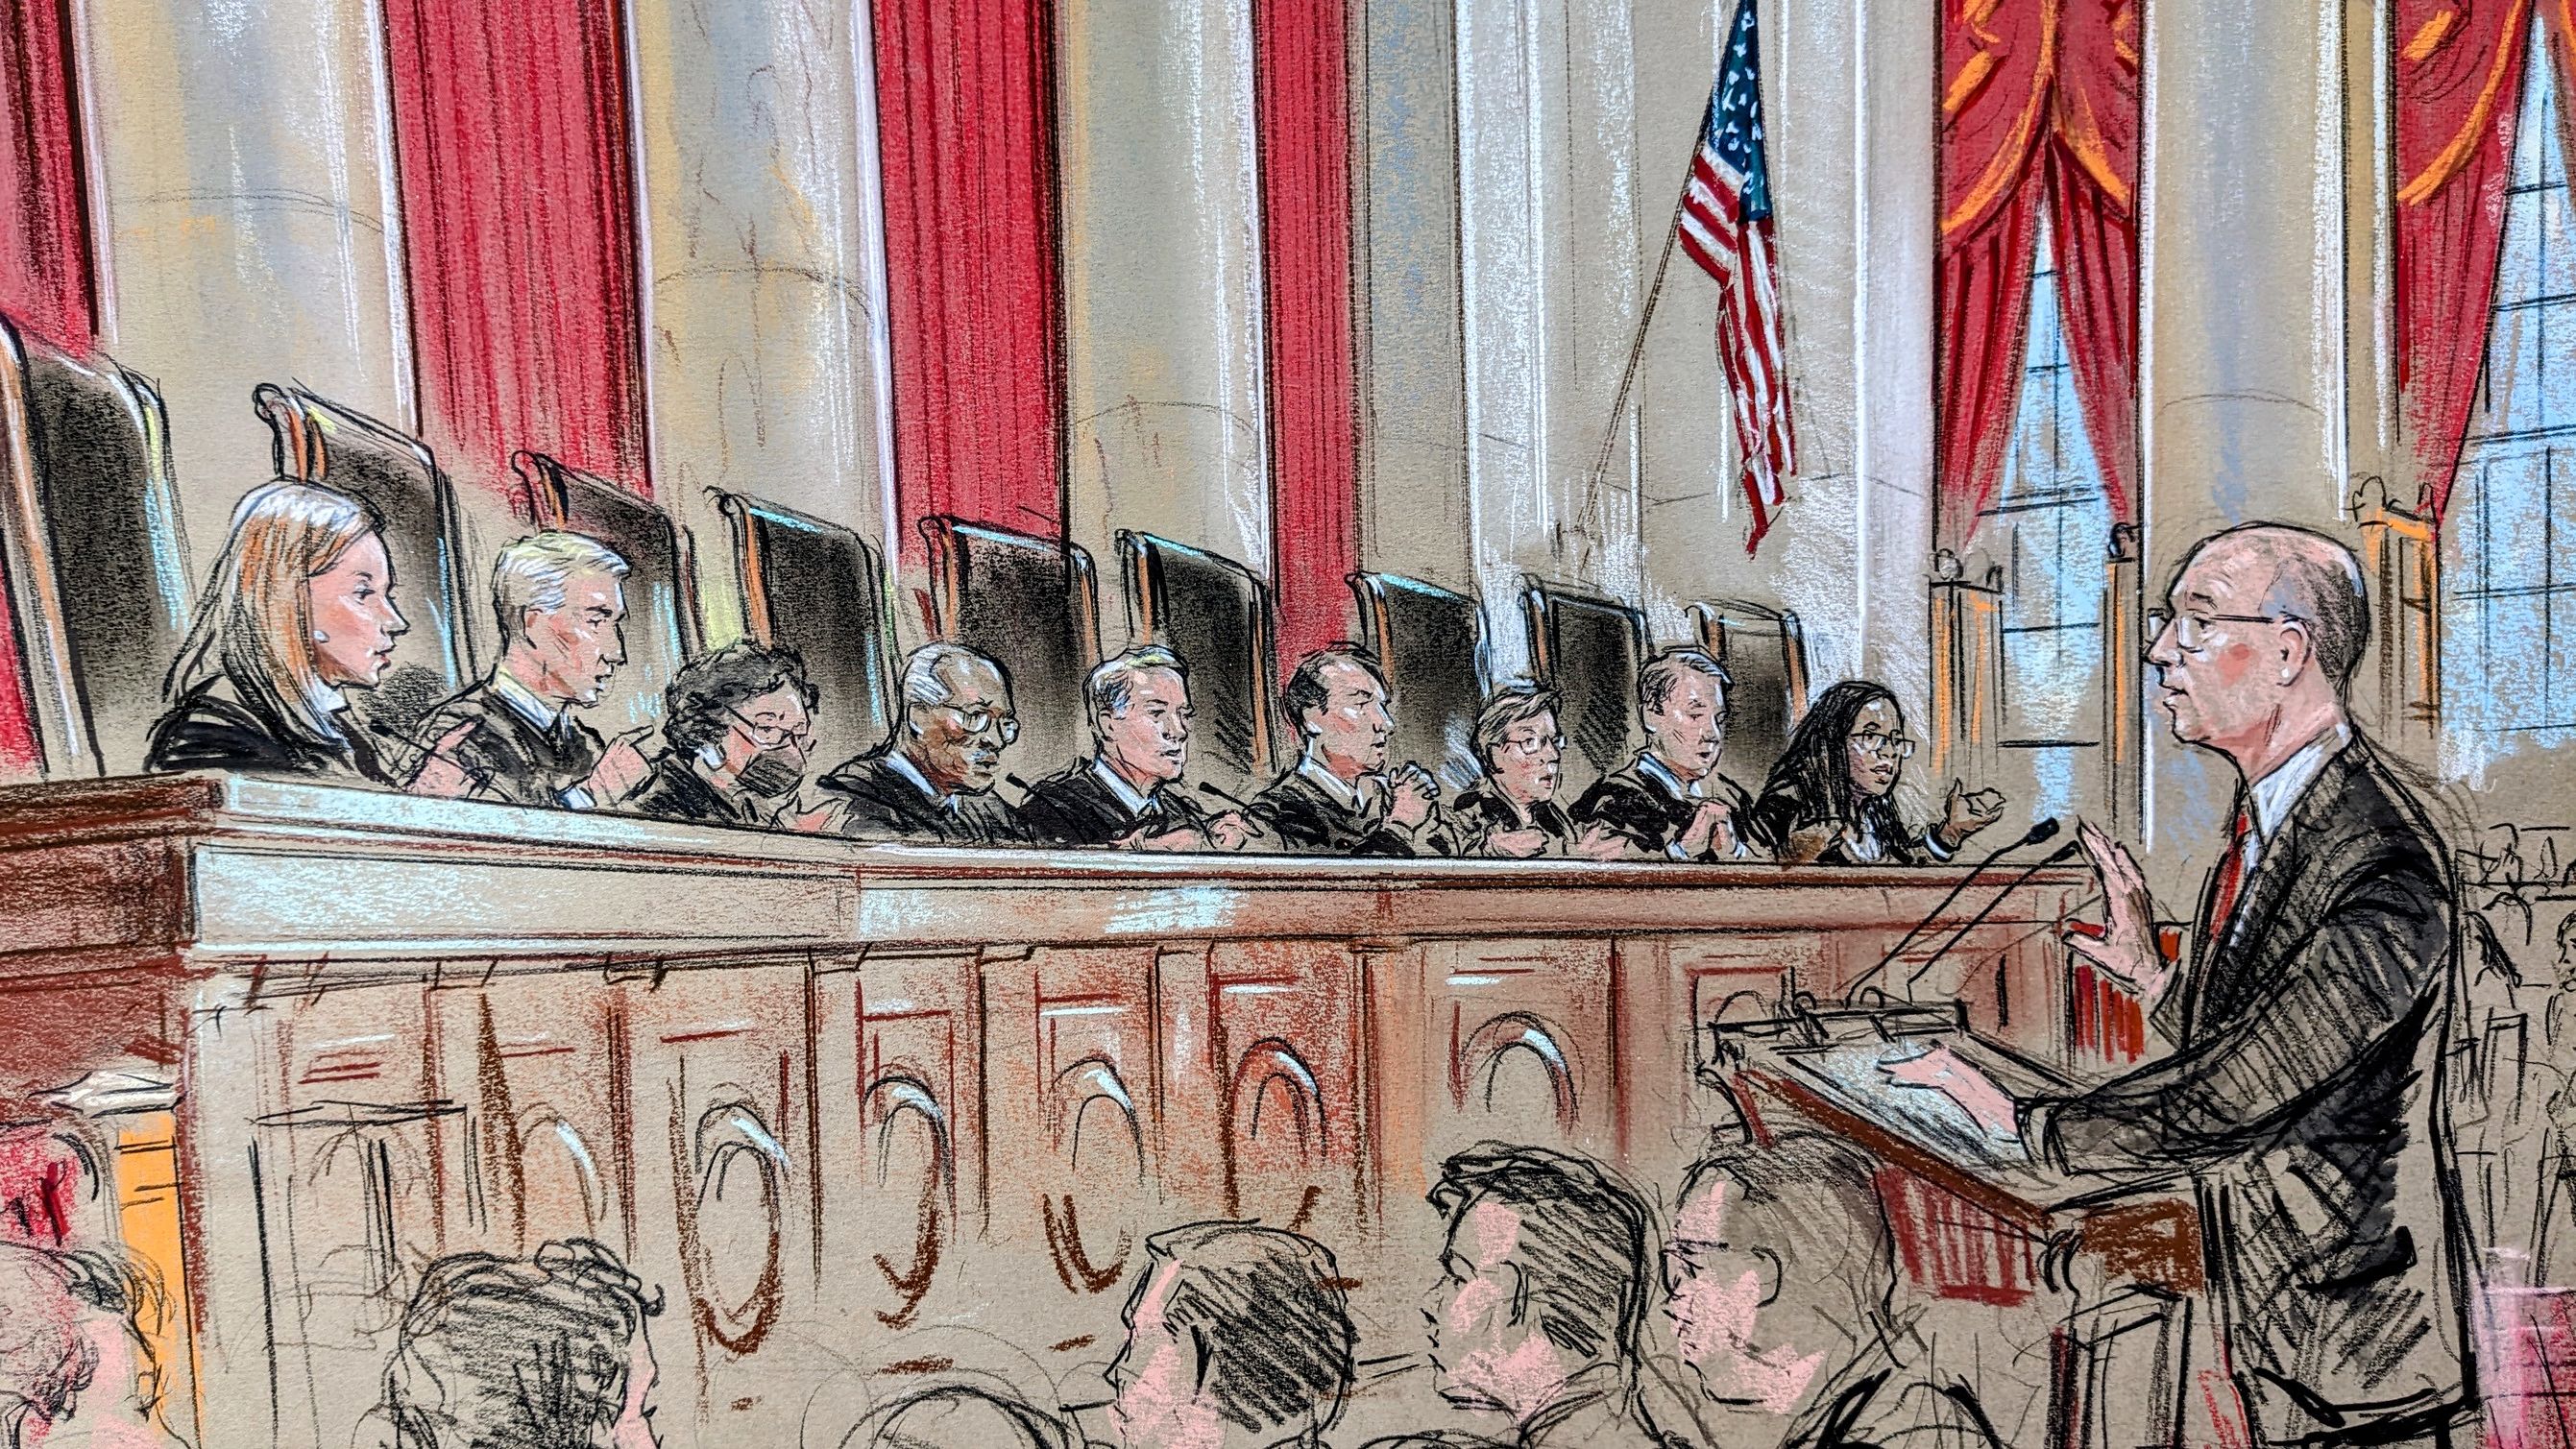 John Roberts shows he still has a grip on the Supreme Court | CNN Politics